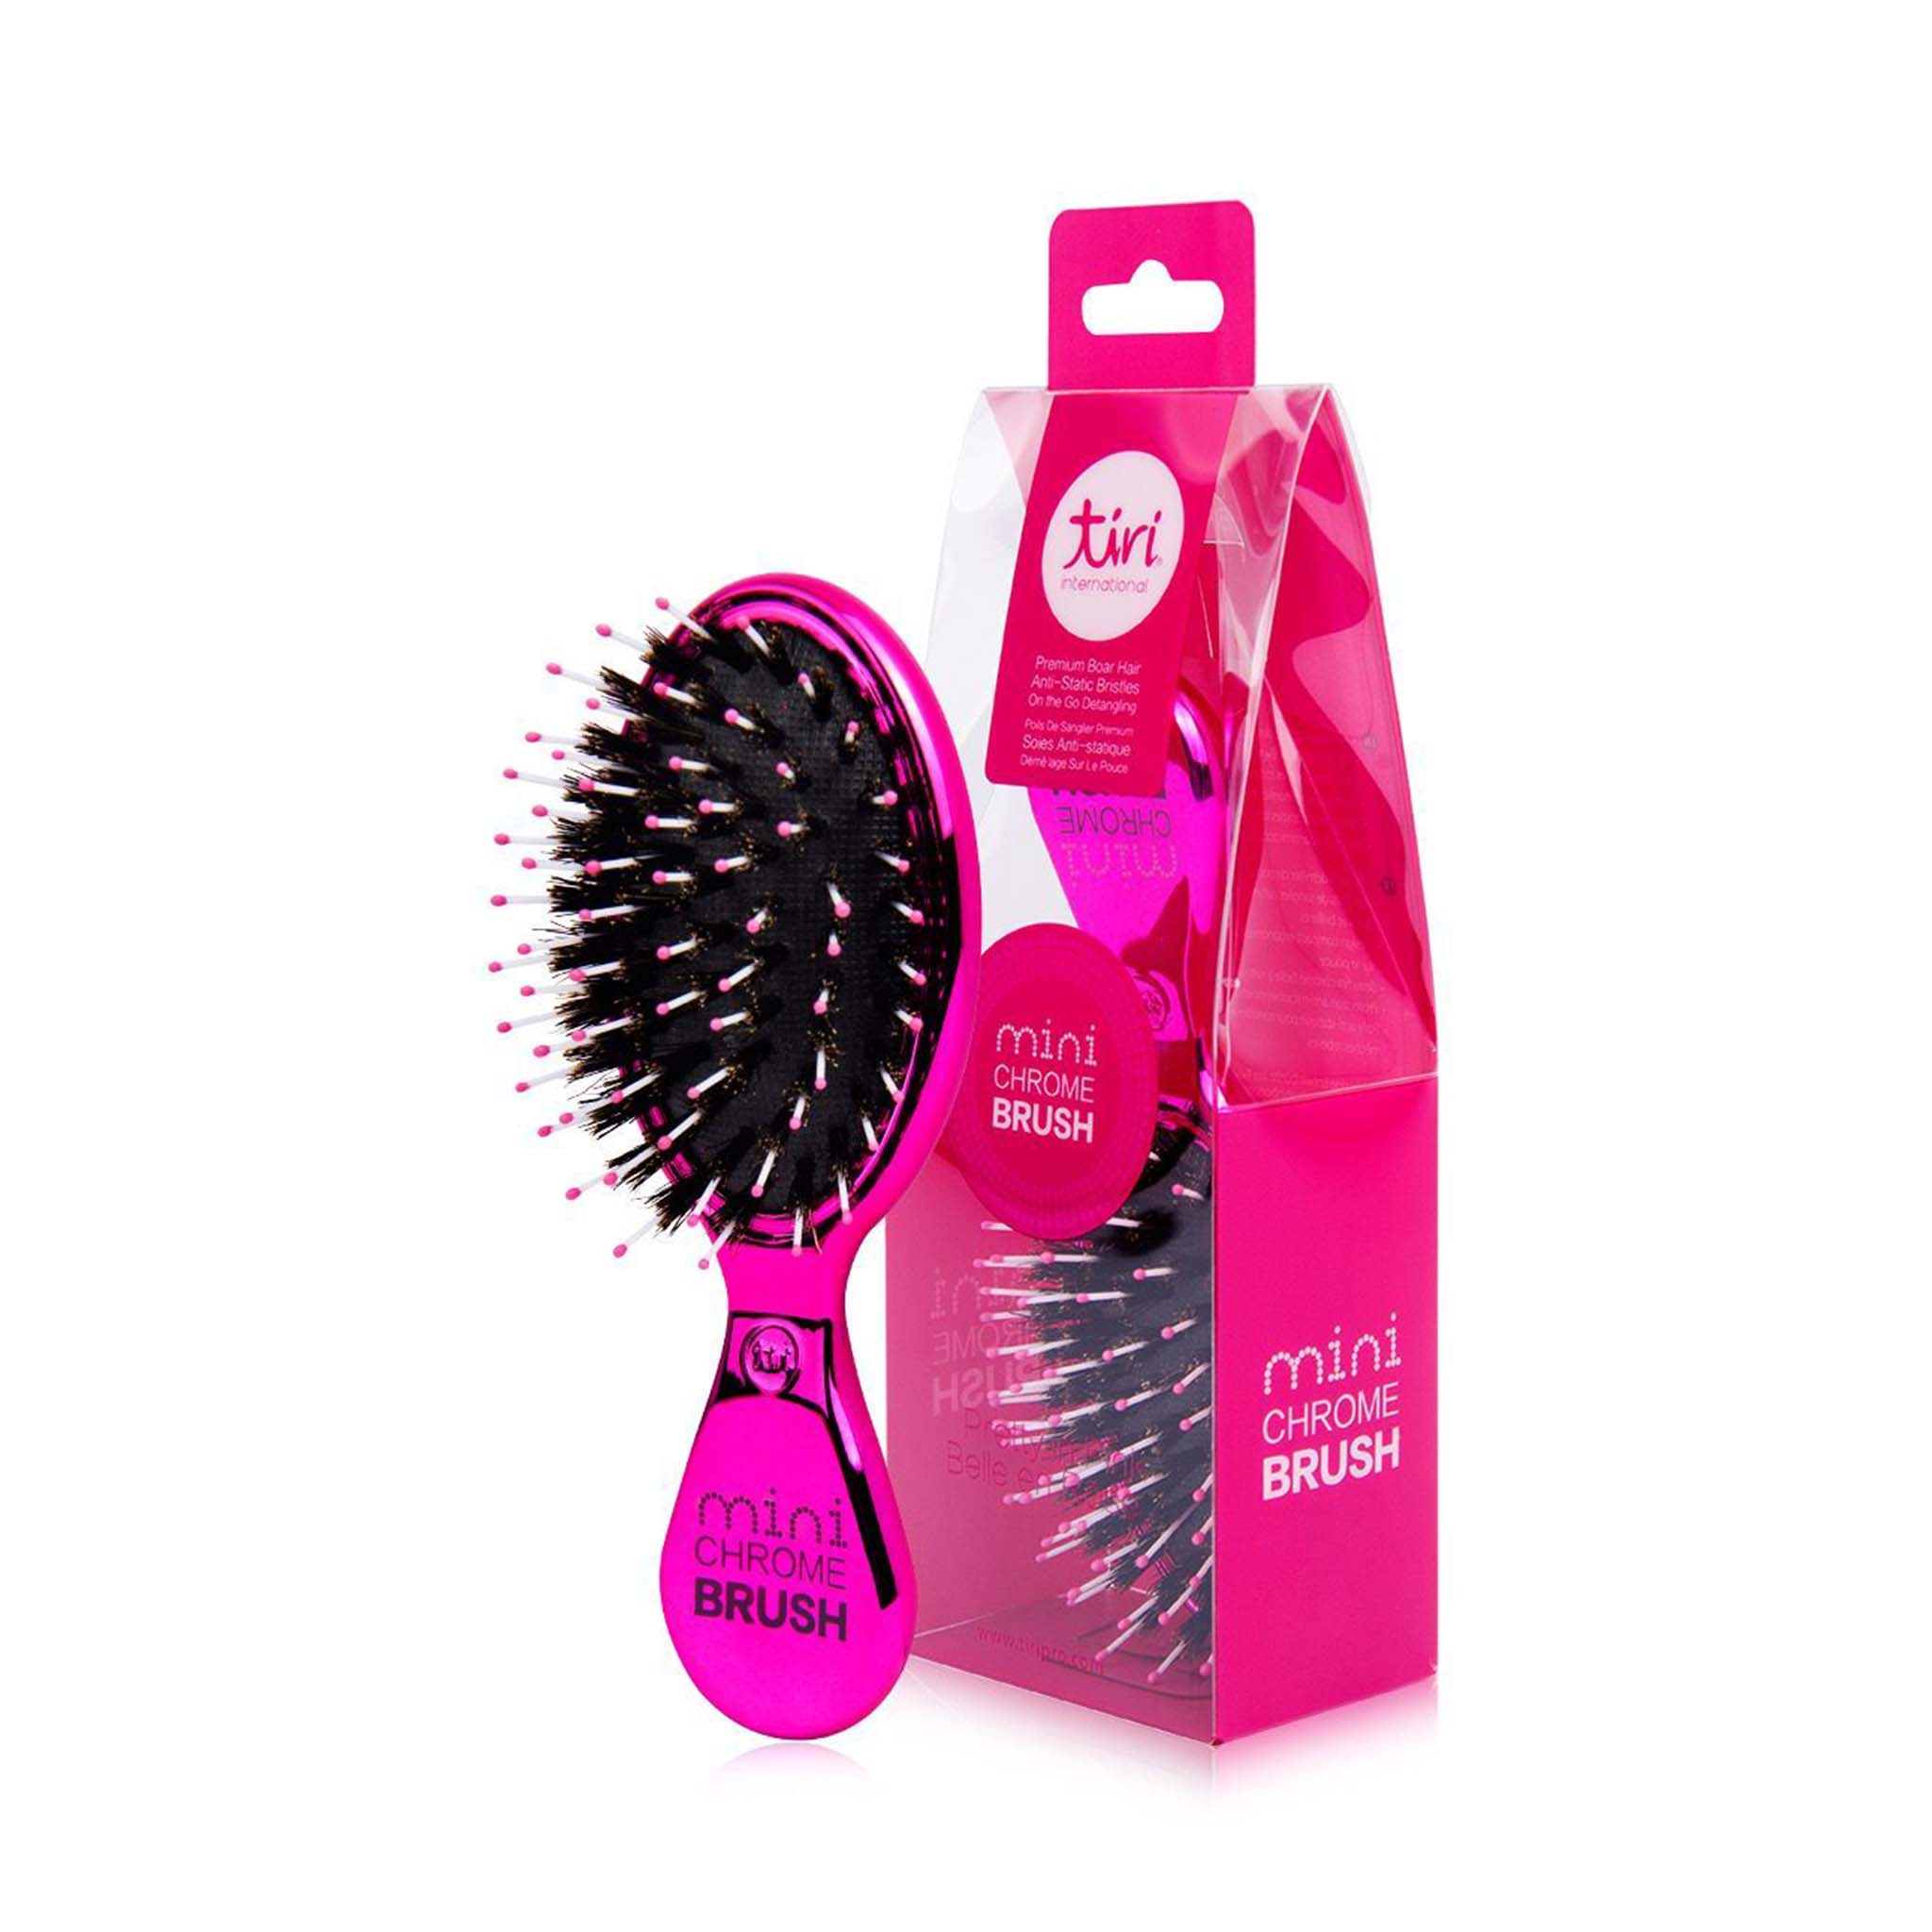 Boar Bristle Brush | Beard Brush With Boar Hair & Nylon/Natural Bristles